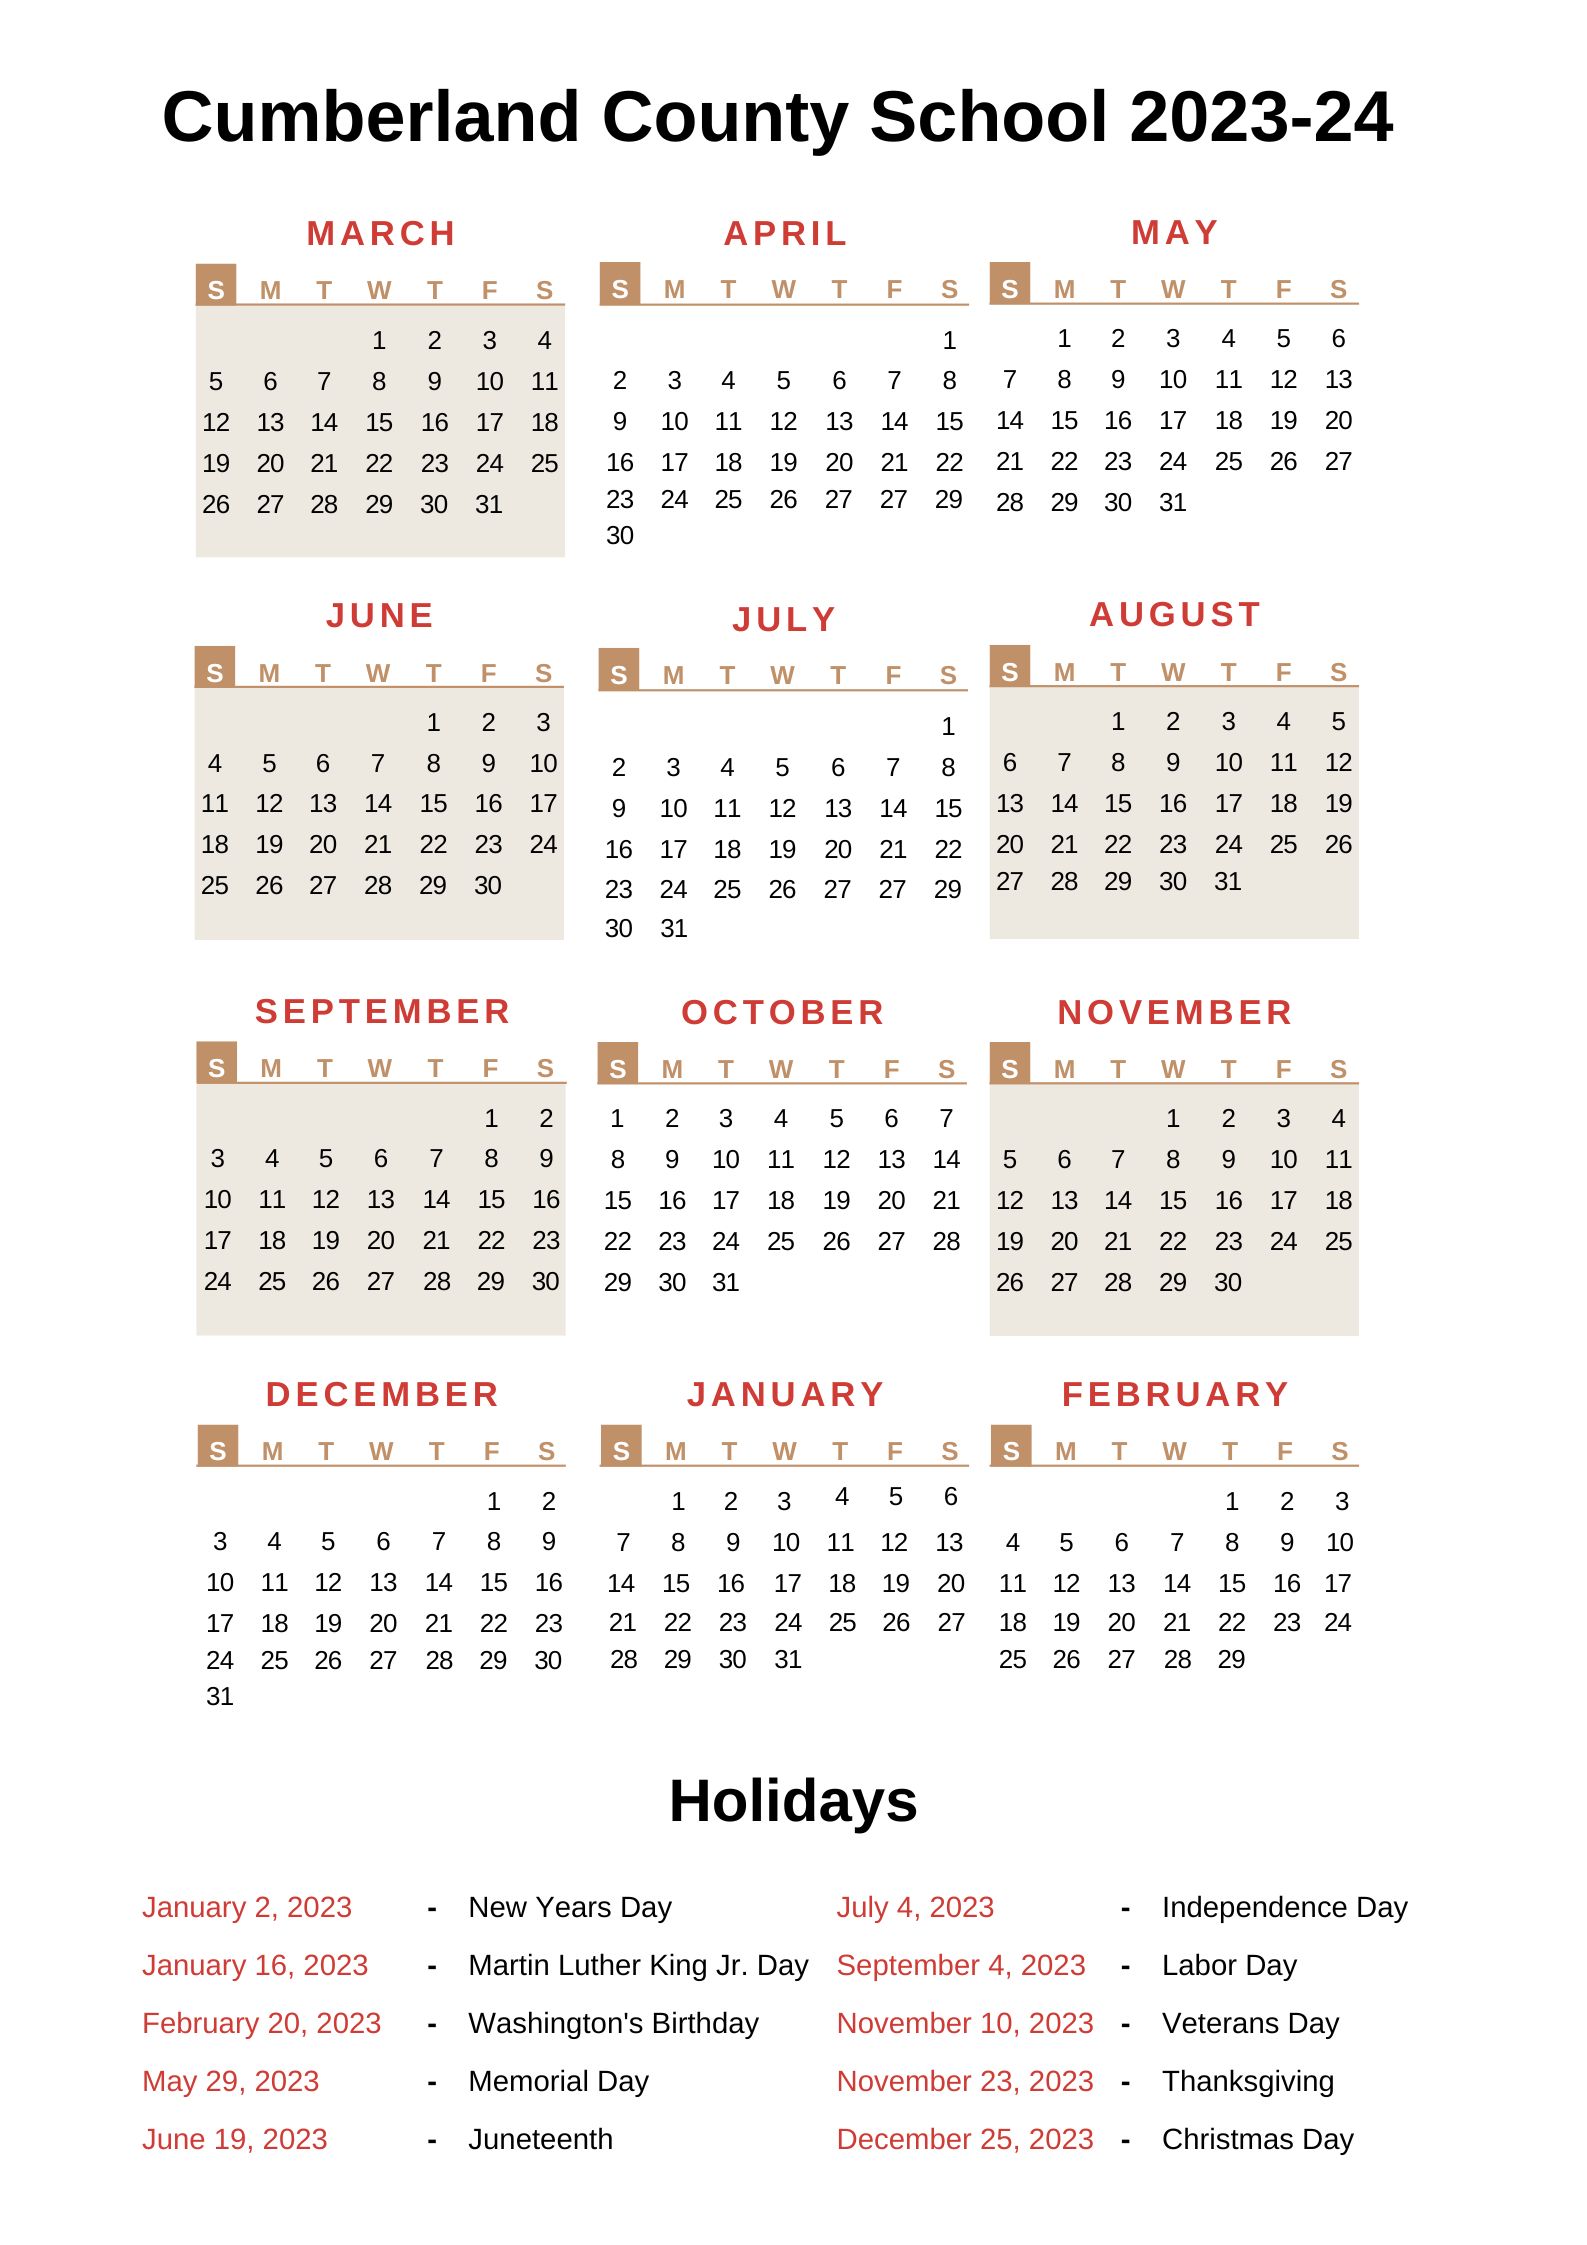 Cumberland County Schools Calendar 202324 With Holidays